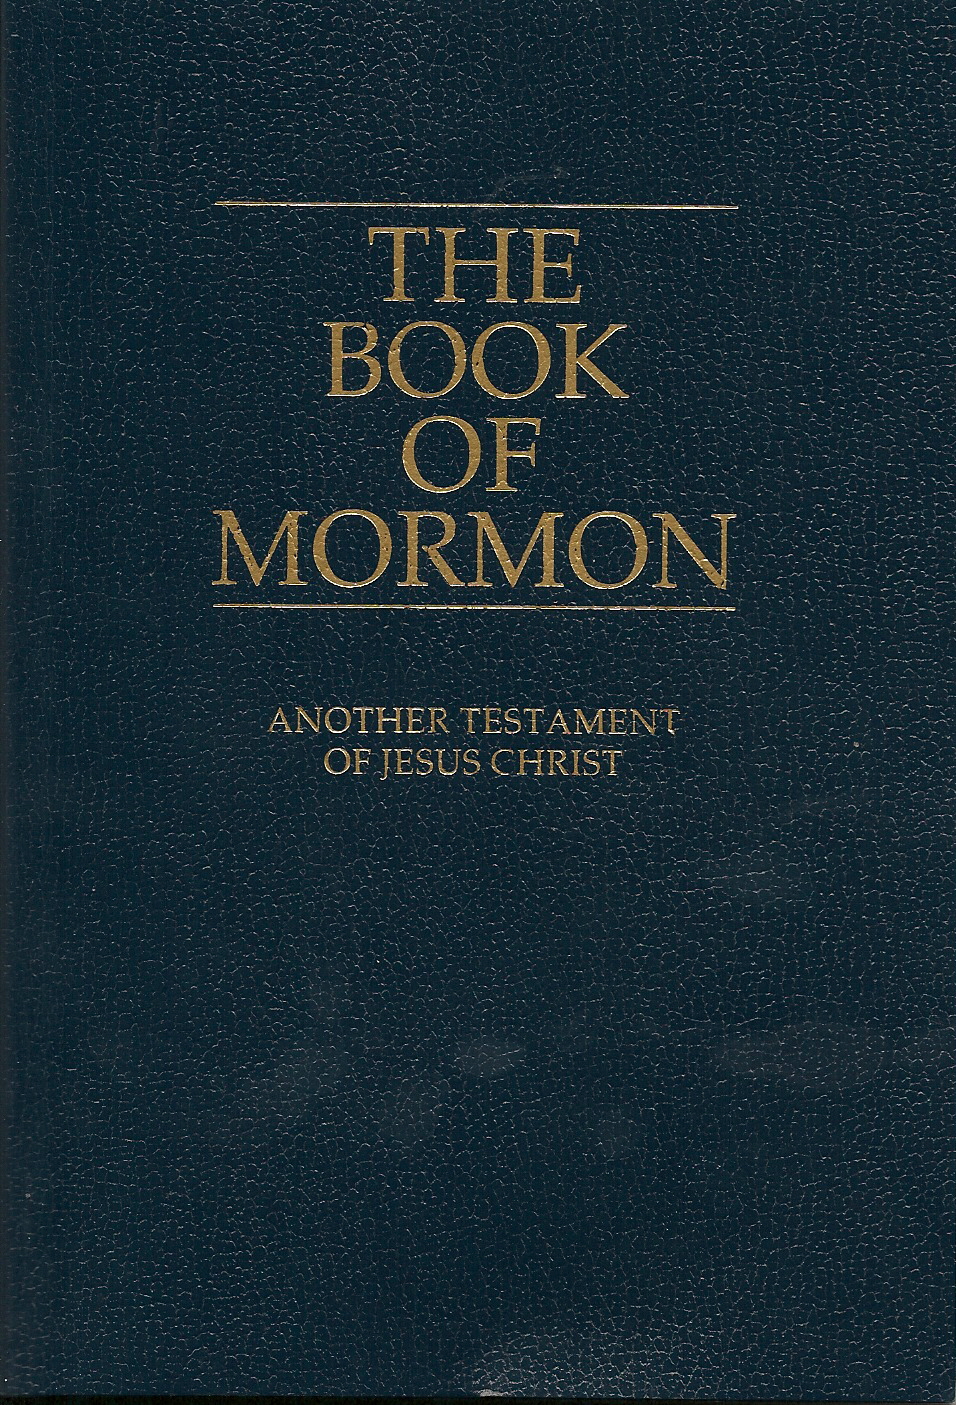 book of mormon clipart - photo #36